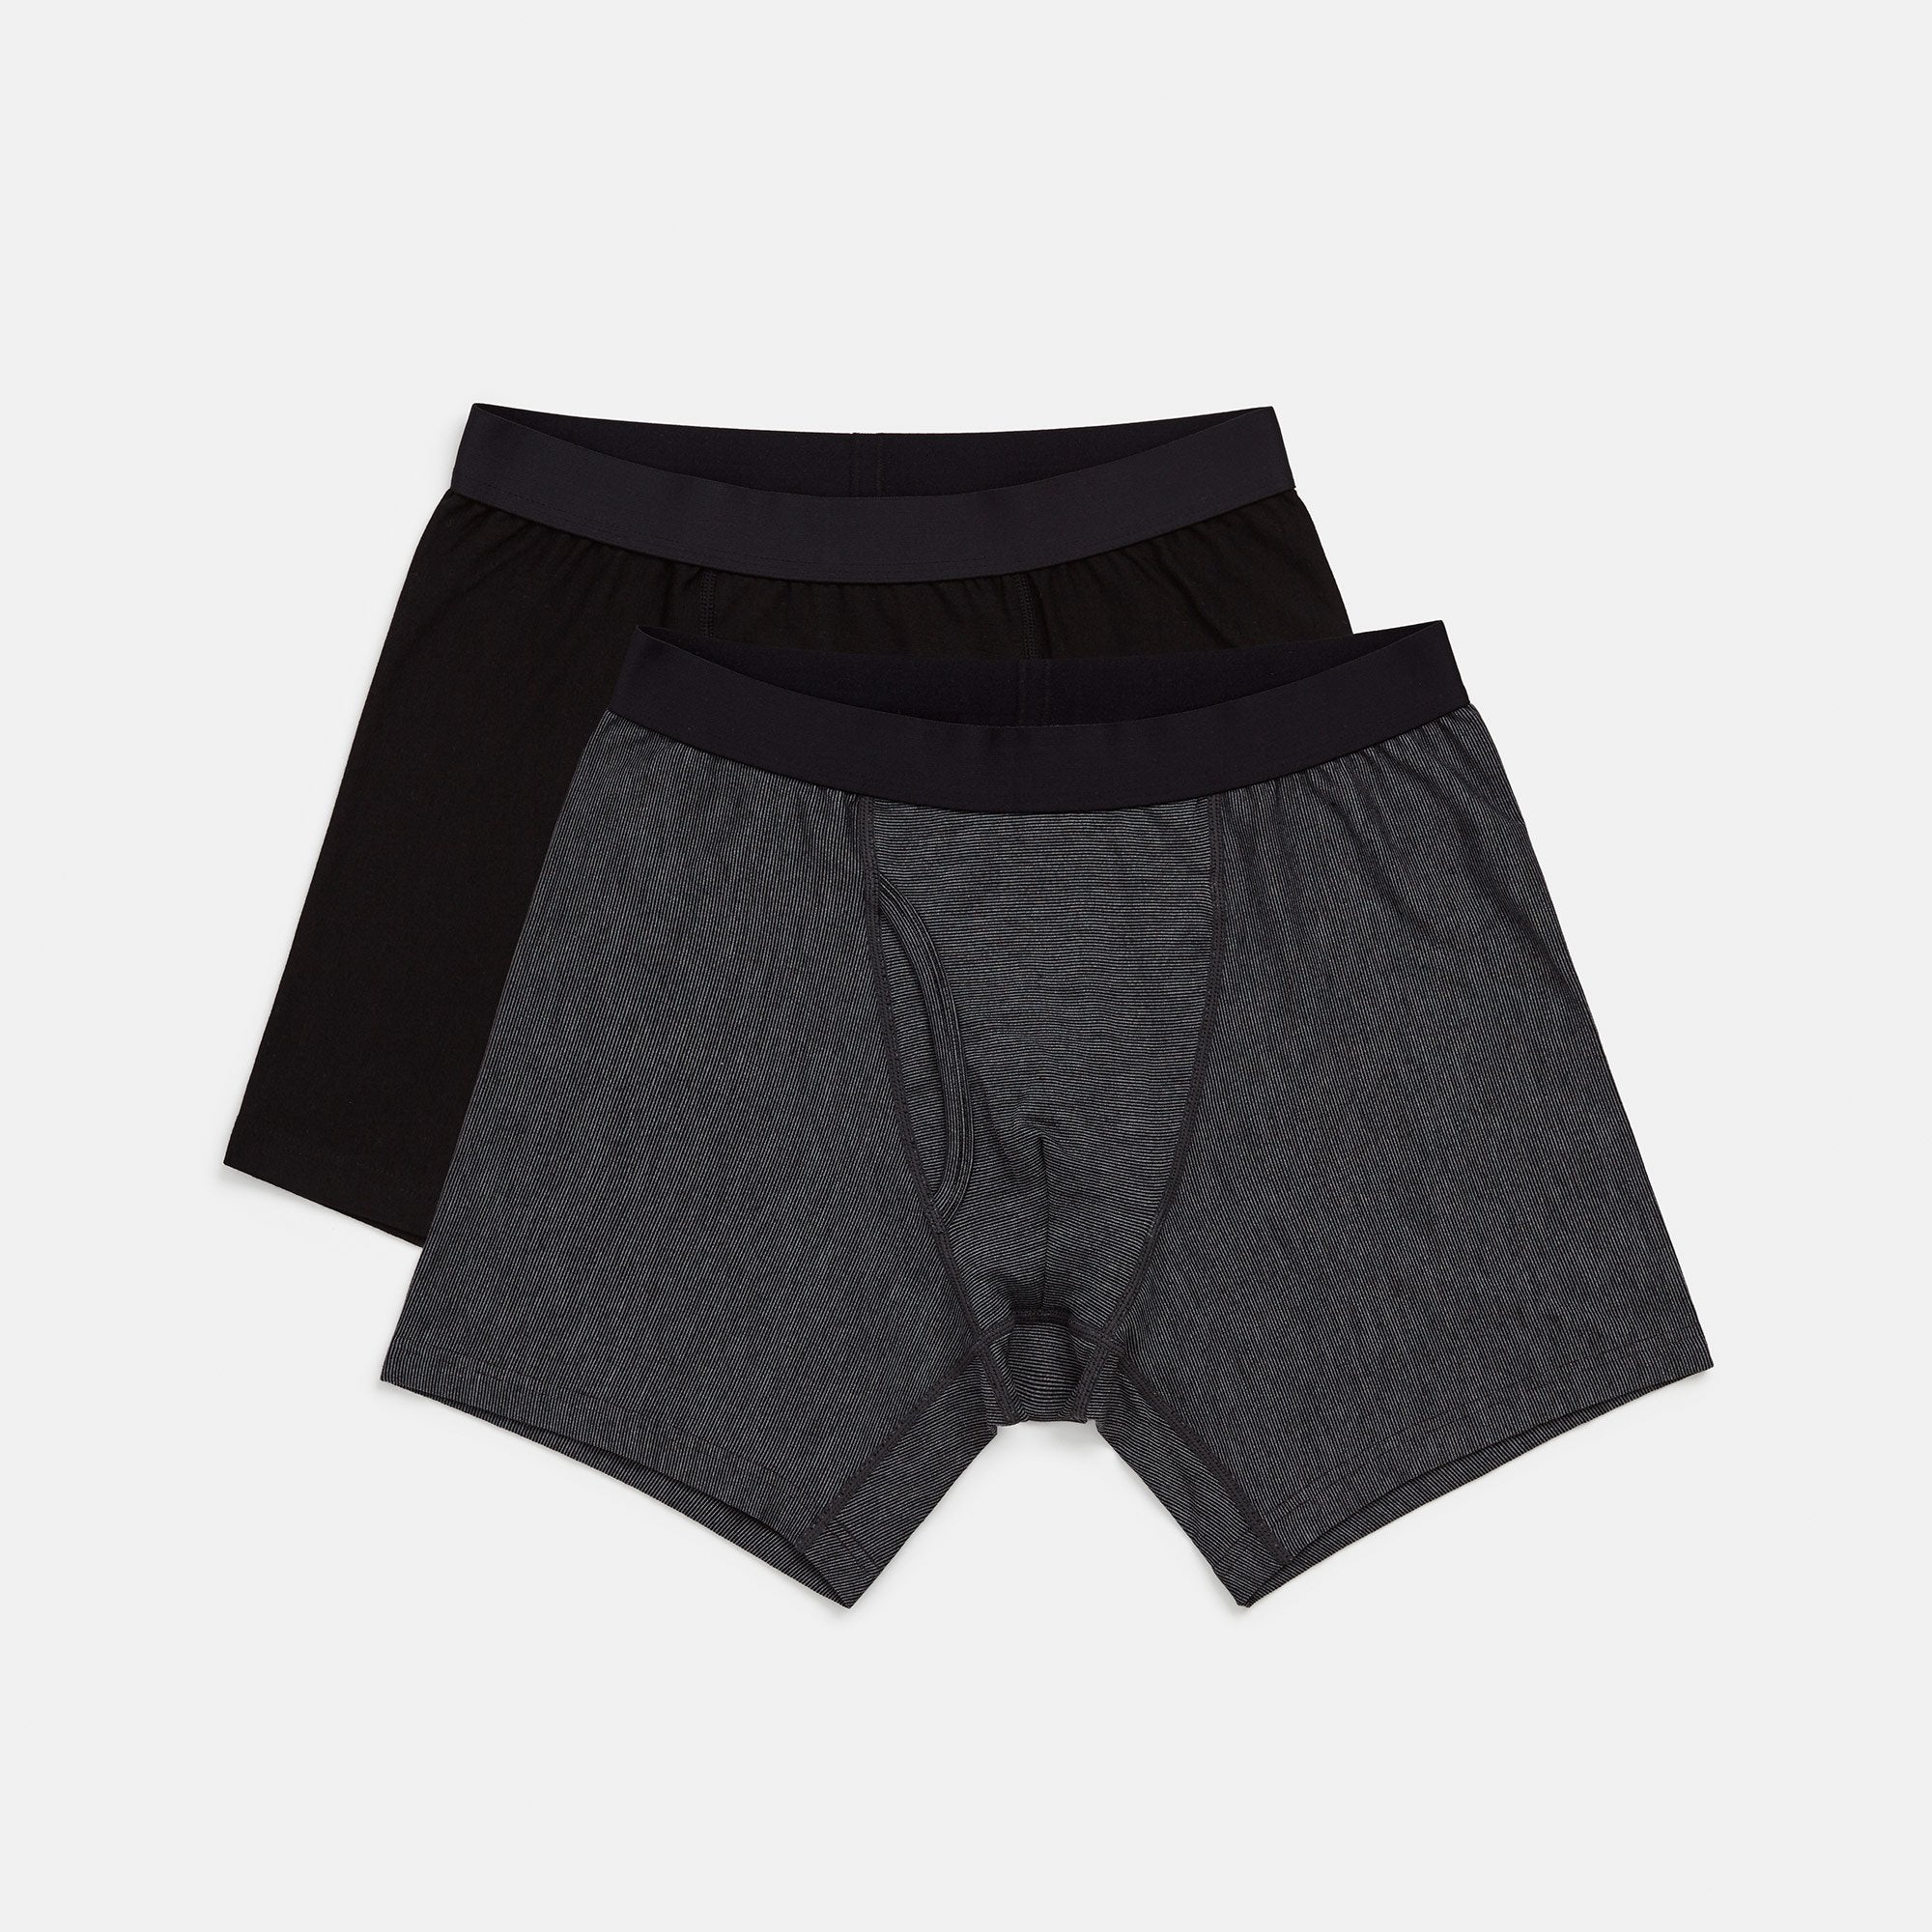 2 Pack Merino Wool Underwear For Men, Men's Boxer Briefs